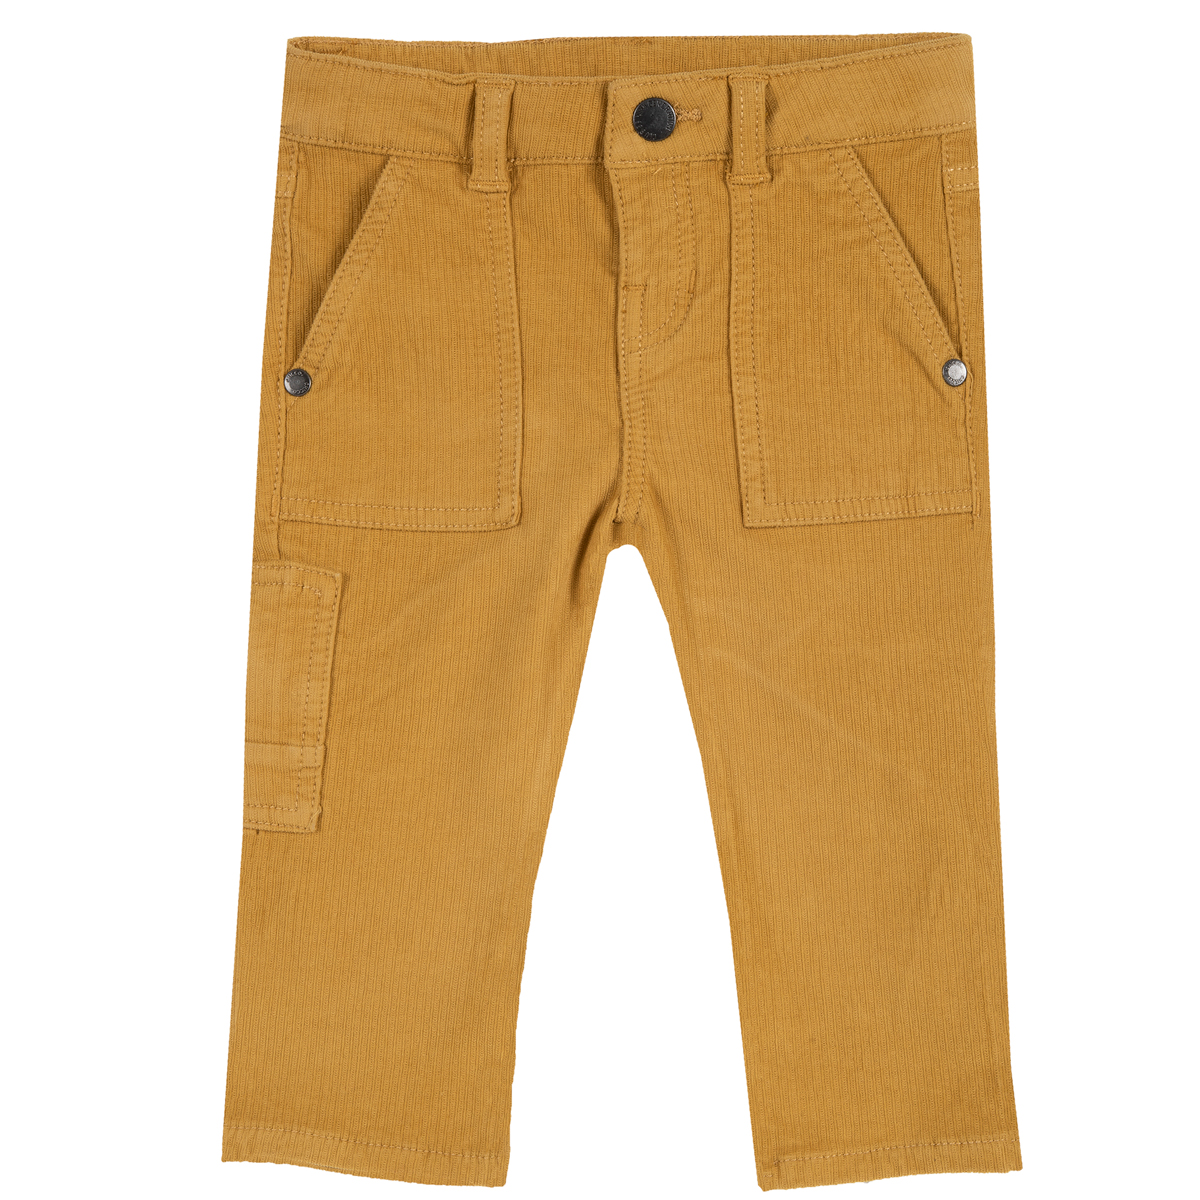 Pantalon lung copii Chicco, buzunare, galben, 08257 CHICCO